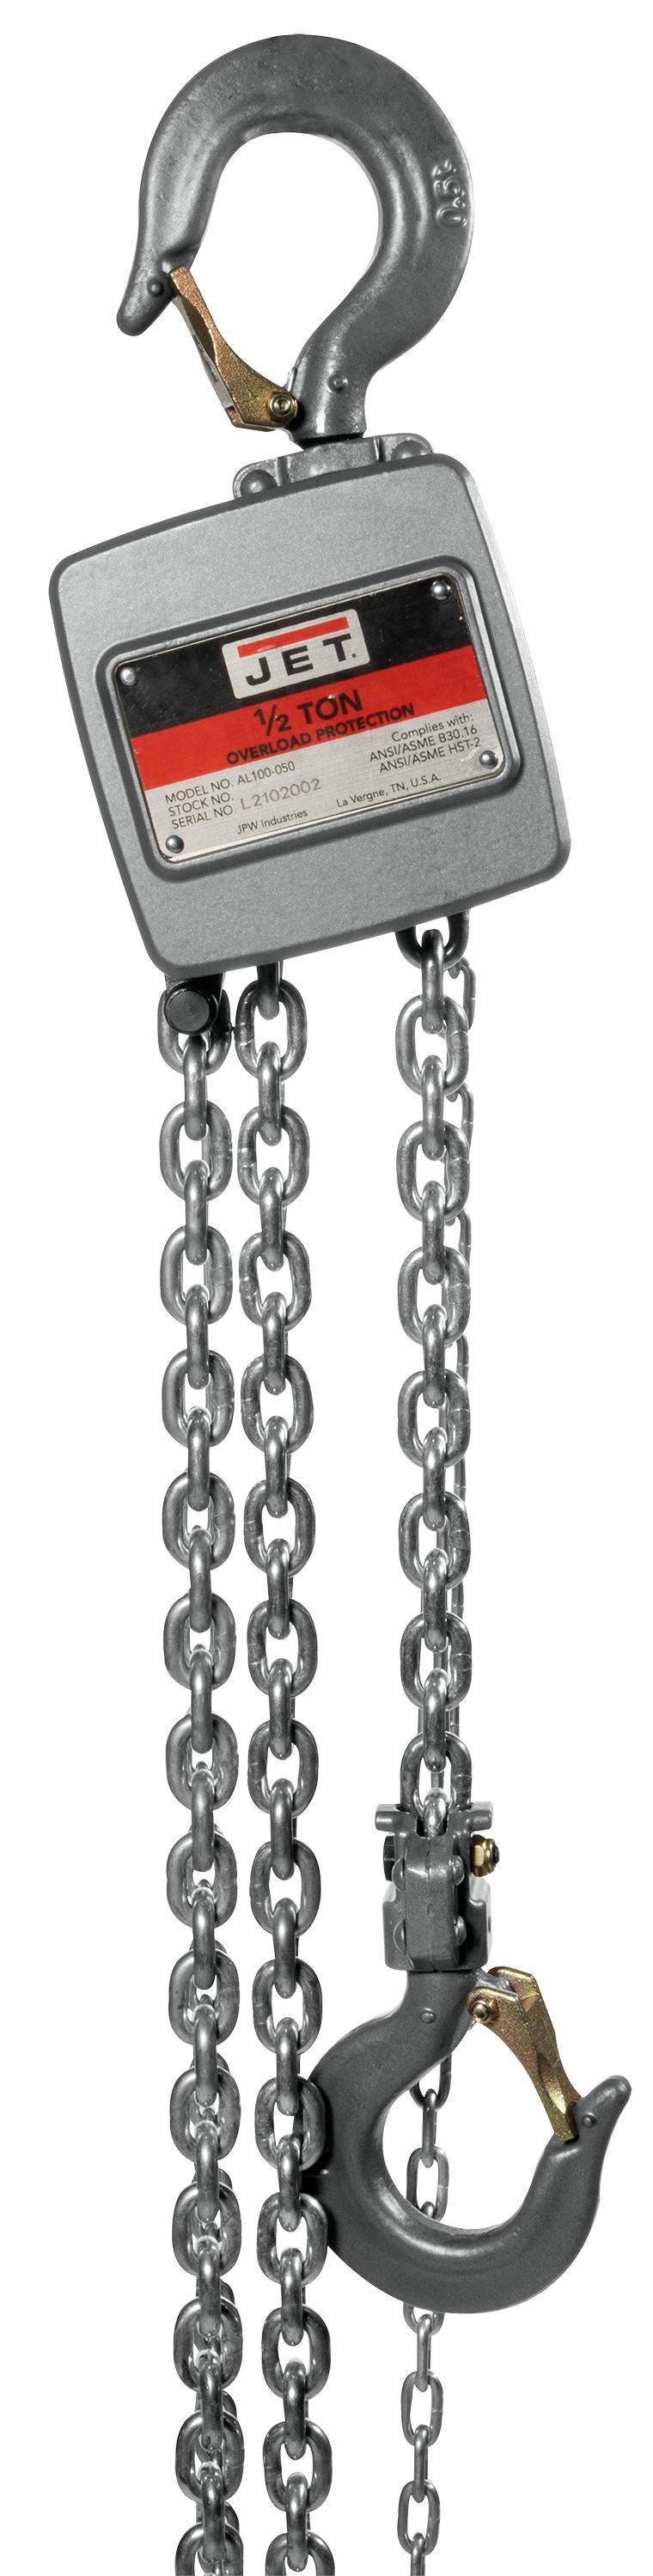 al100 series aluminum chain hoists